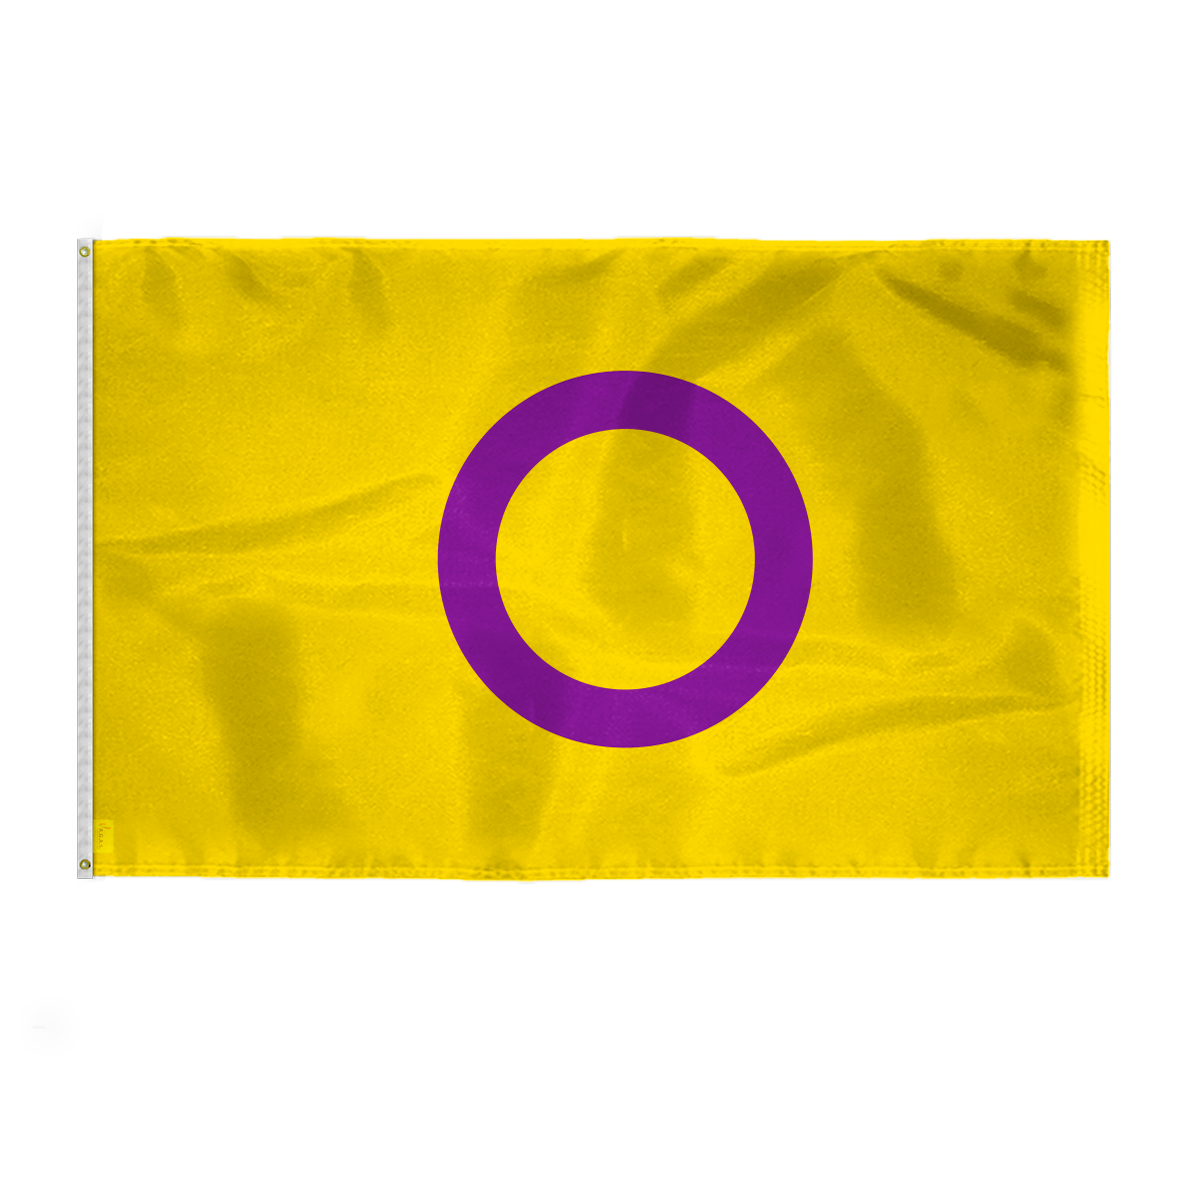 AGAS Large Intersex Pride Flag 6x10 Ft - Printed 200D Nylon